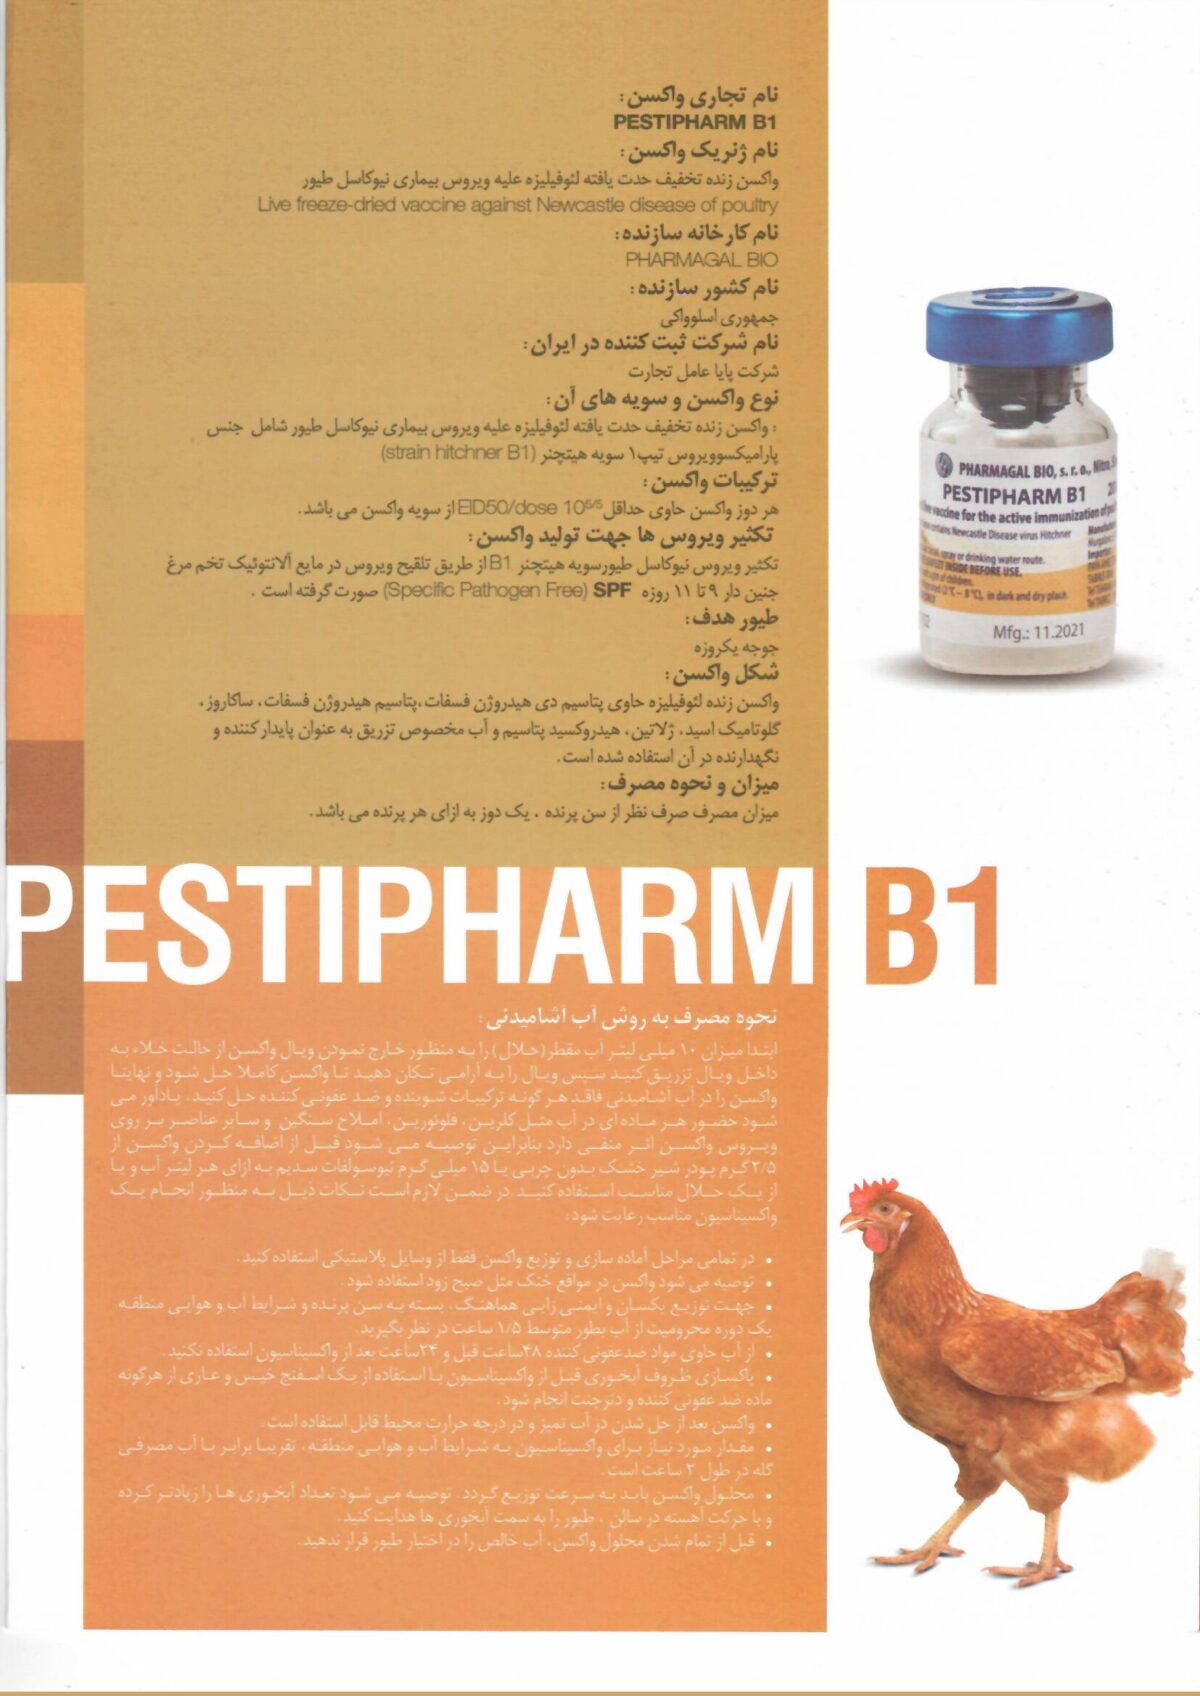 PESTIPHARM B1